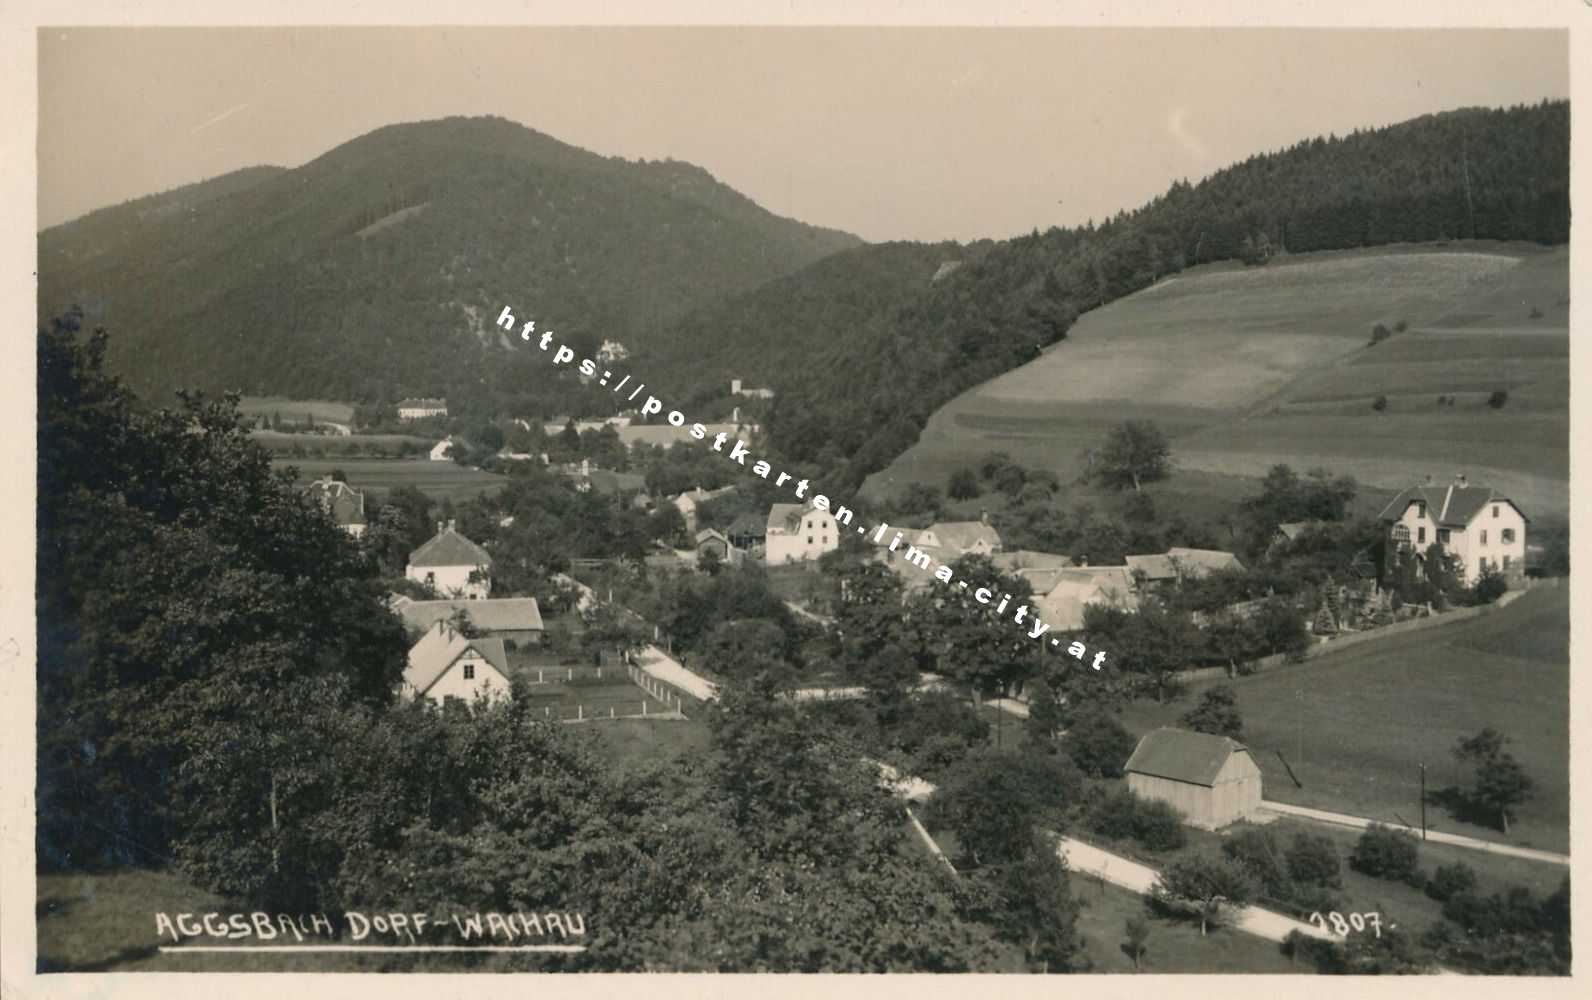 Aggsbach Dorf 1931